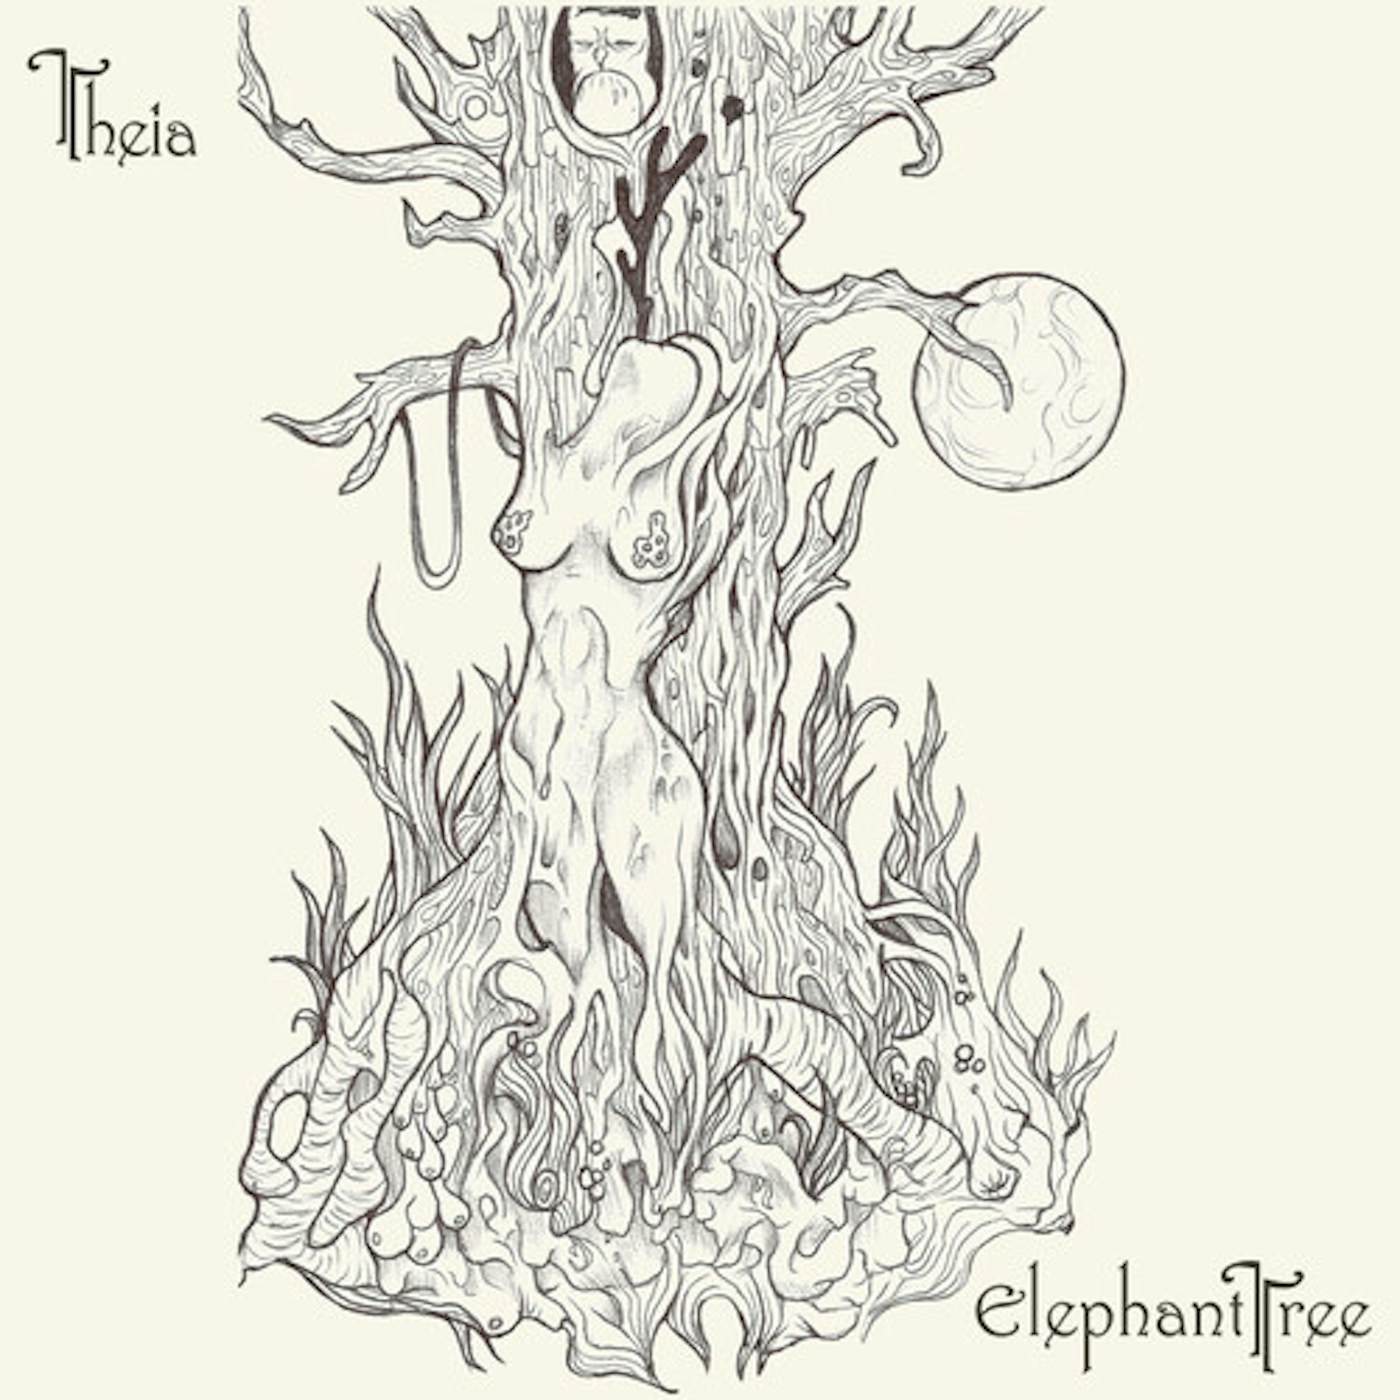 Elephant Tree THEIA (WHITE & GOLD GALAXY PATTERN VINYL) Vinyl Record